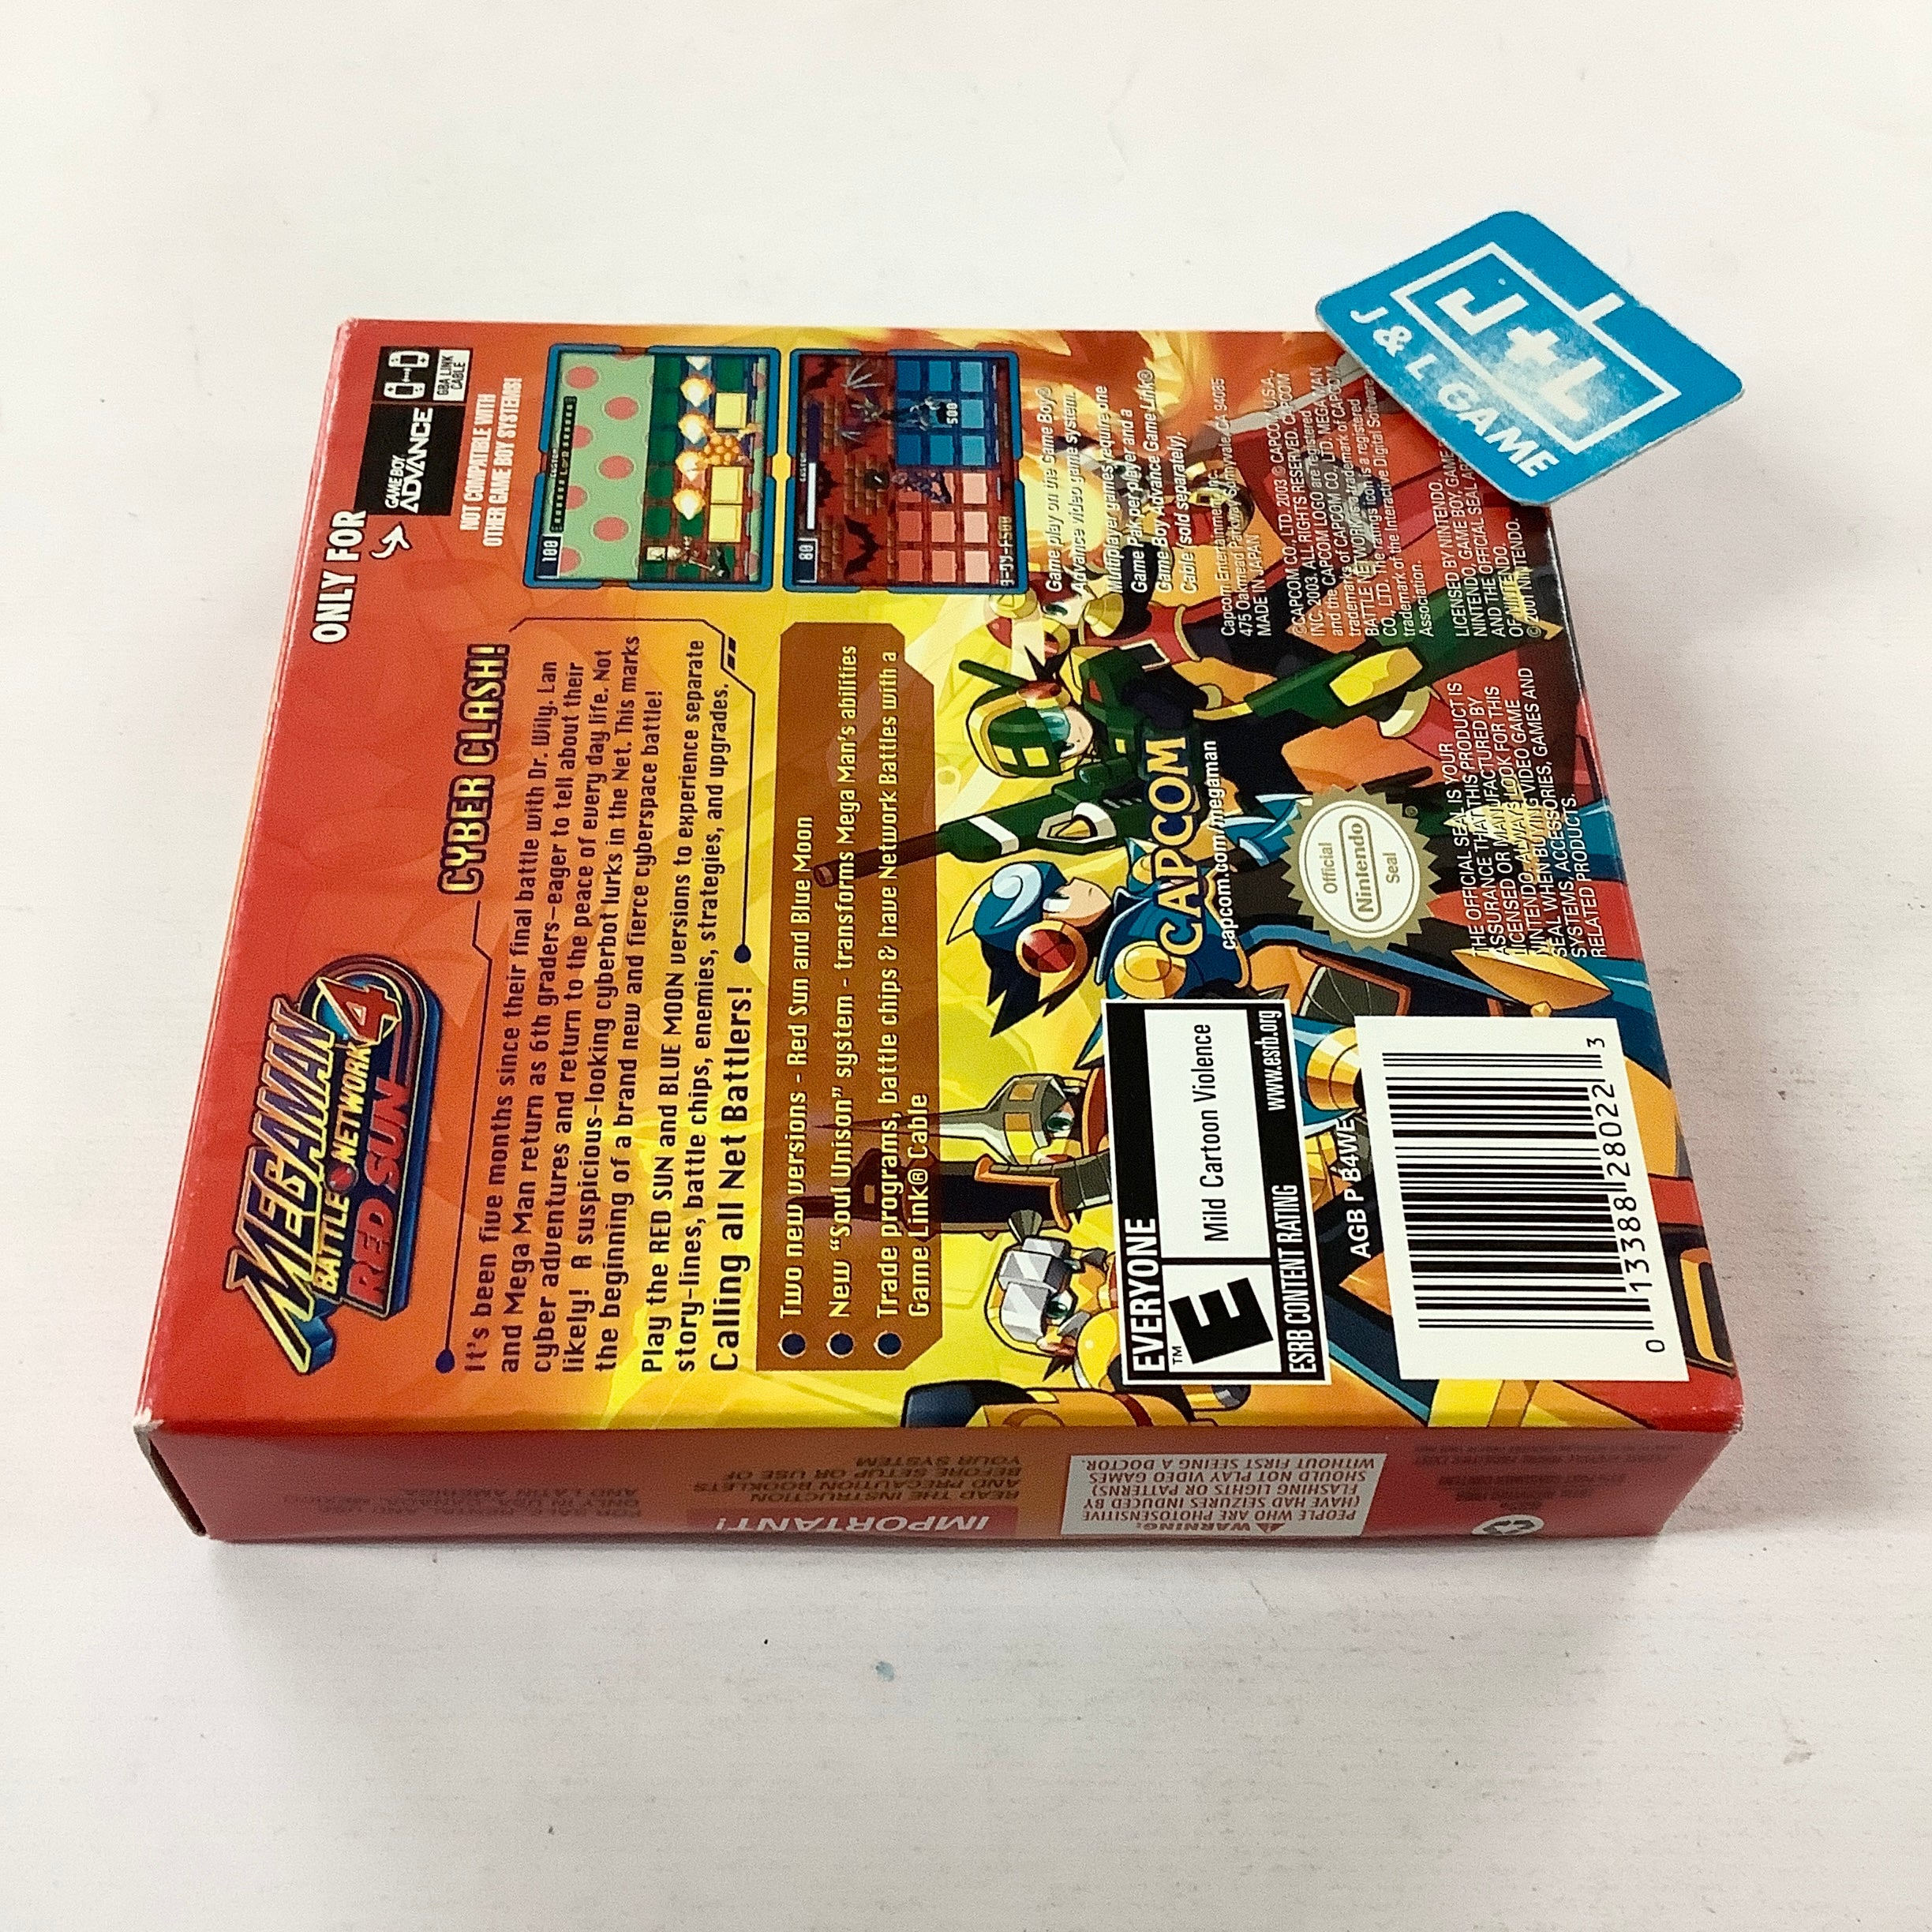 Mega Man Battle Network 4: Red Sun - (GBA) Game Boy Advance [Pre-Owned] Video Games Capcom   